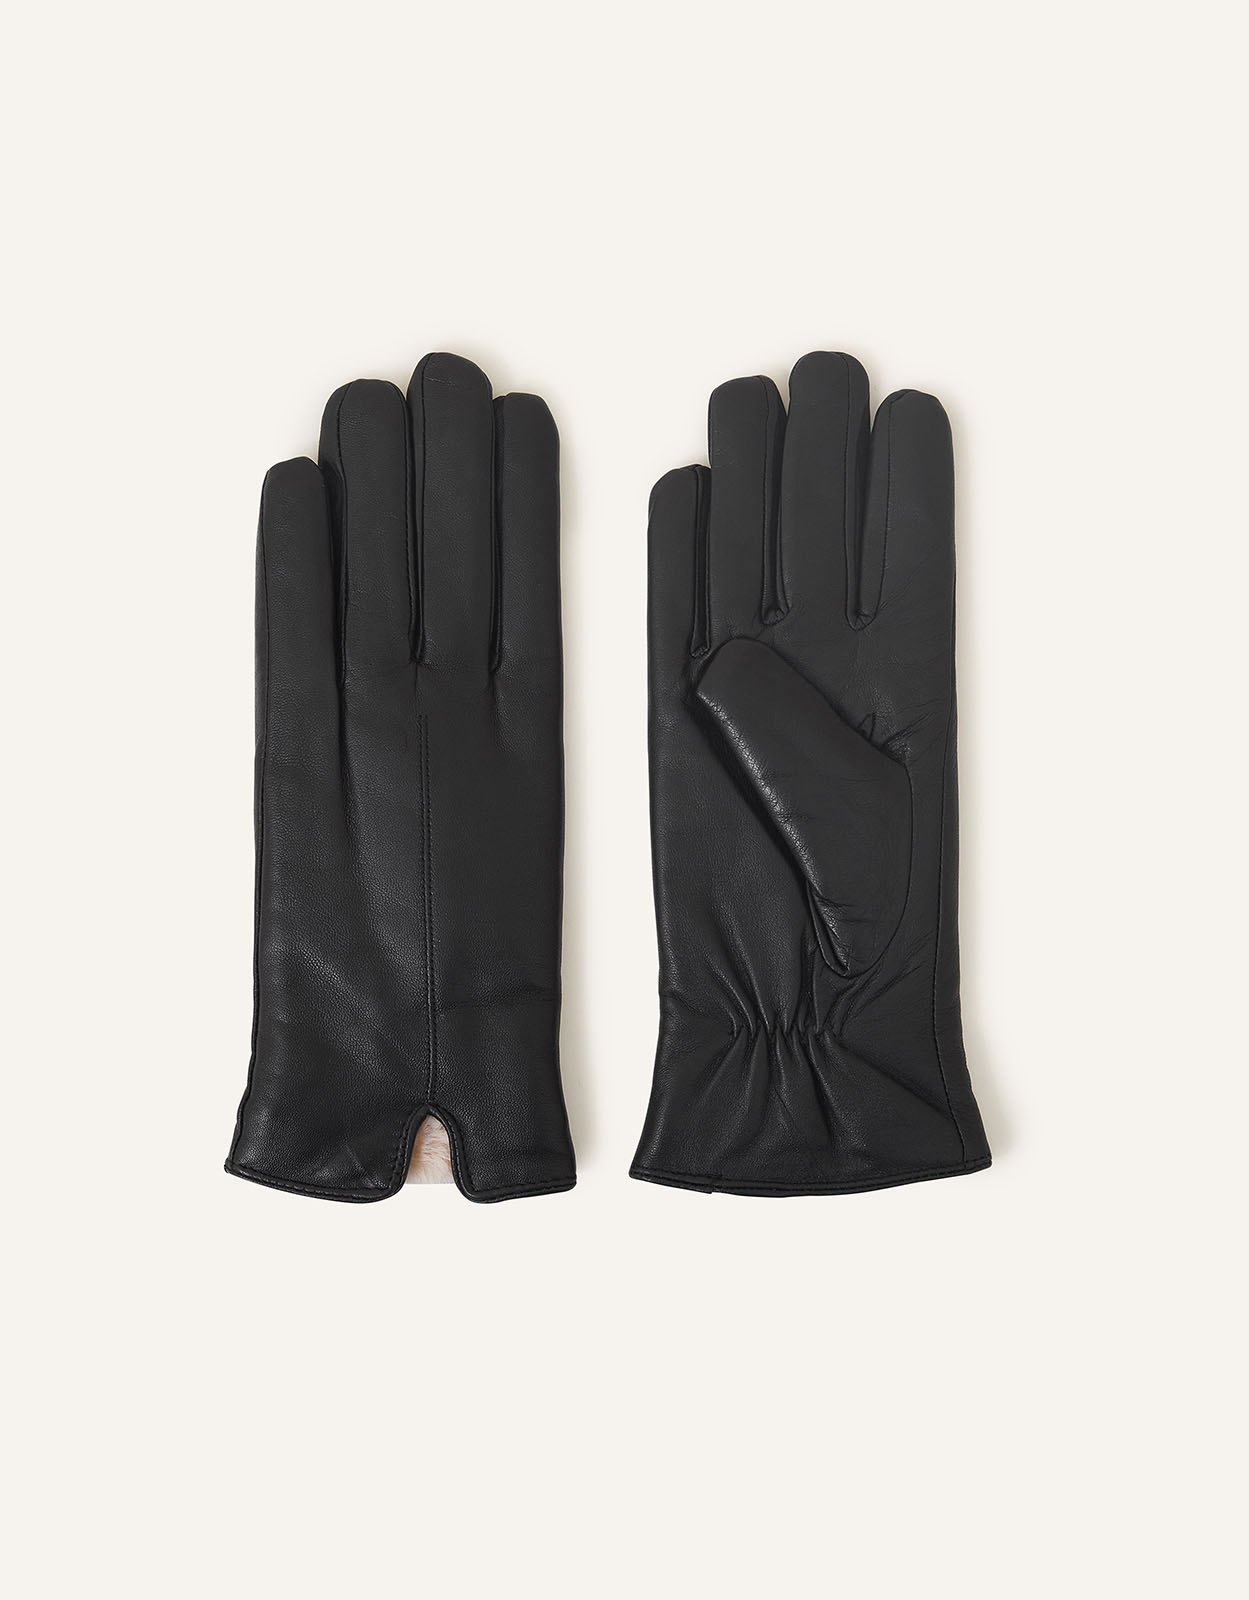 Accessorize Black Leather Faux Fur-Lined Gloves, Size: S / M